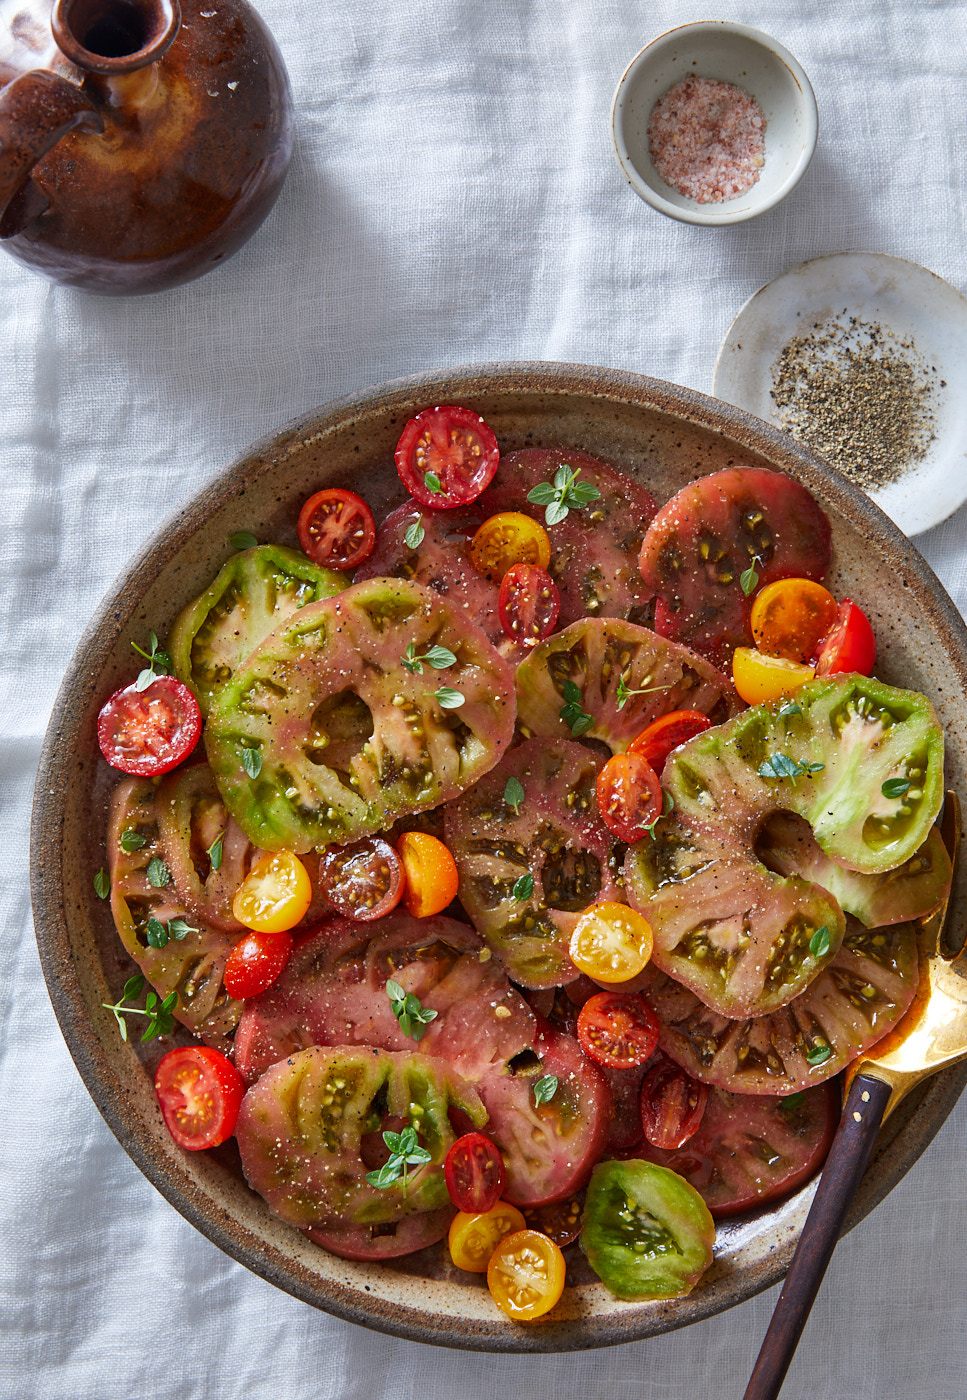 Heirloom tomato salad on table with olive oil